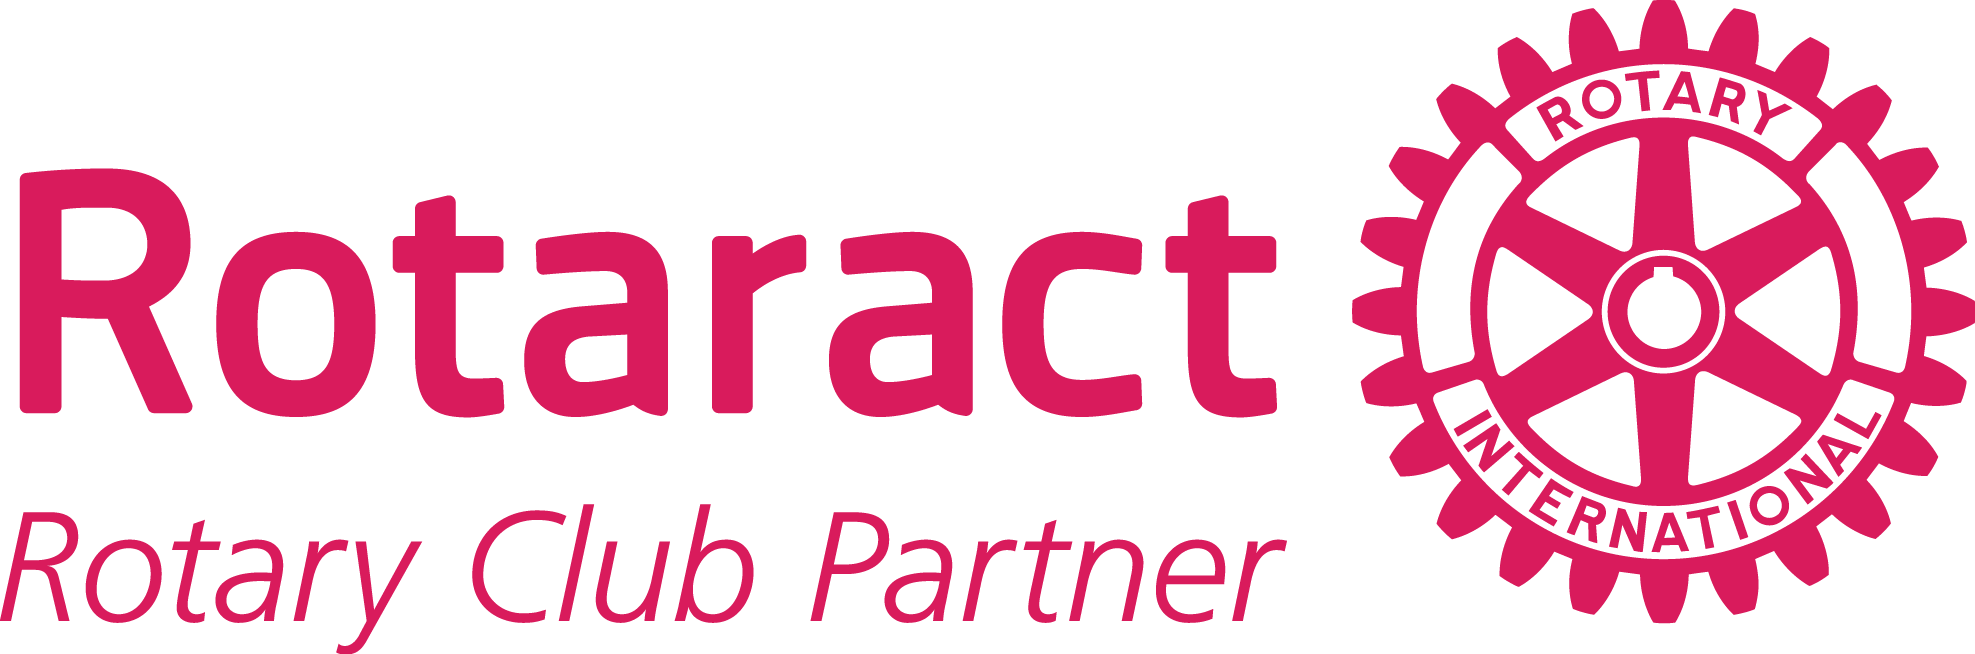 Rotract Logo - Rotaract Rotary Club Partner (1975x654), Png Download